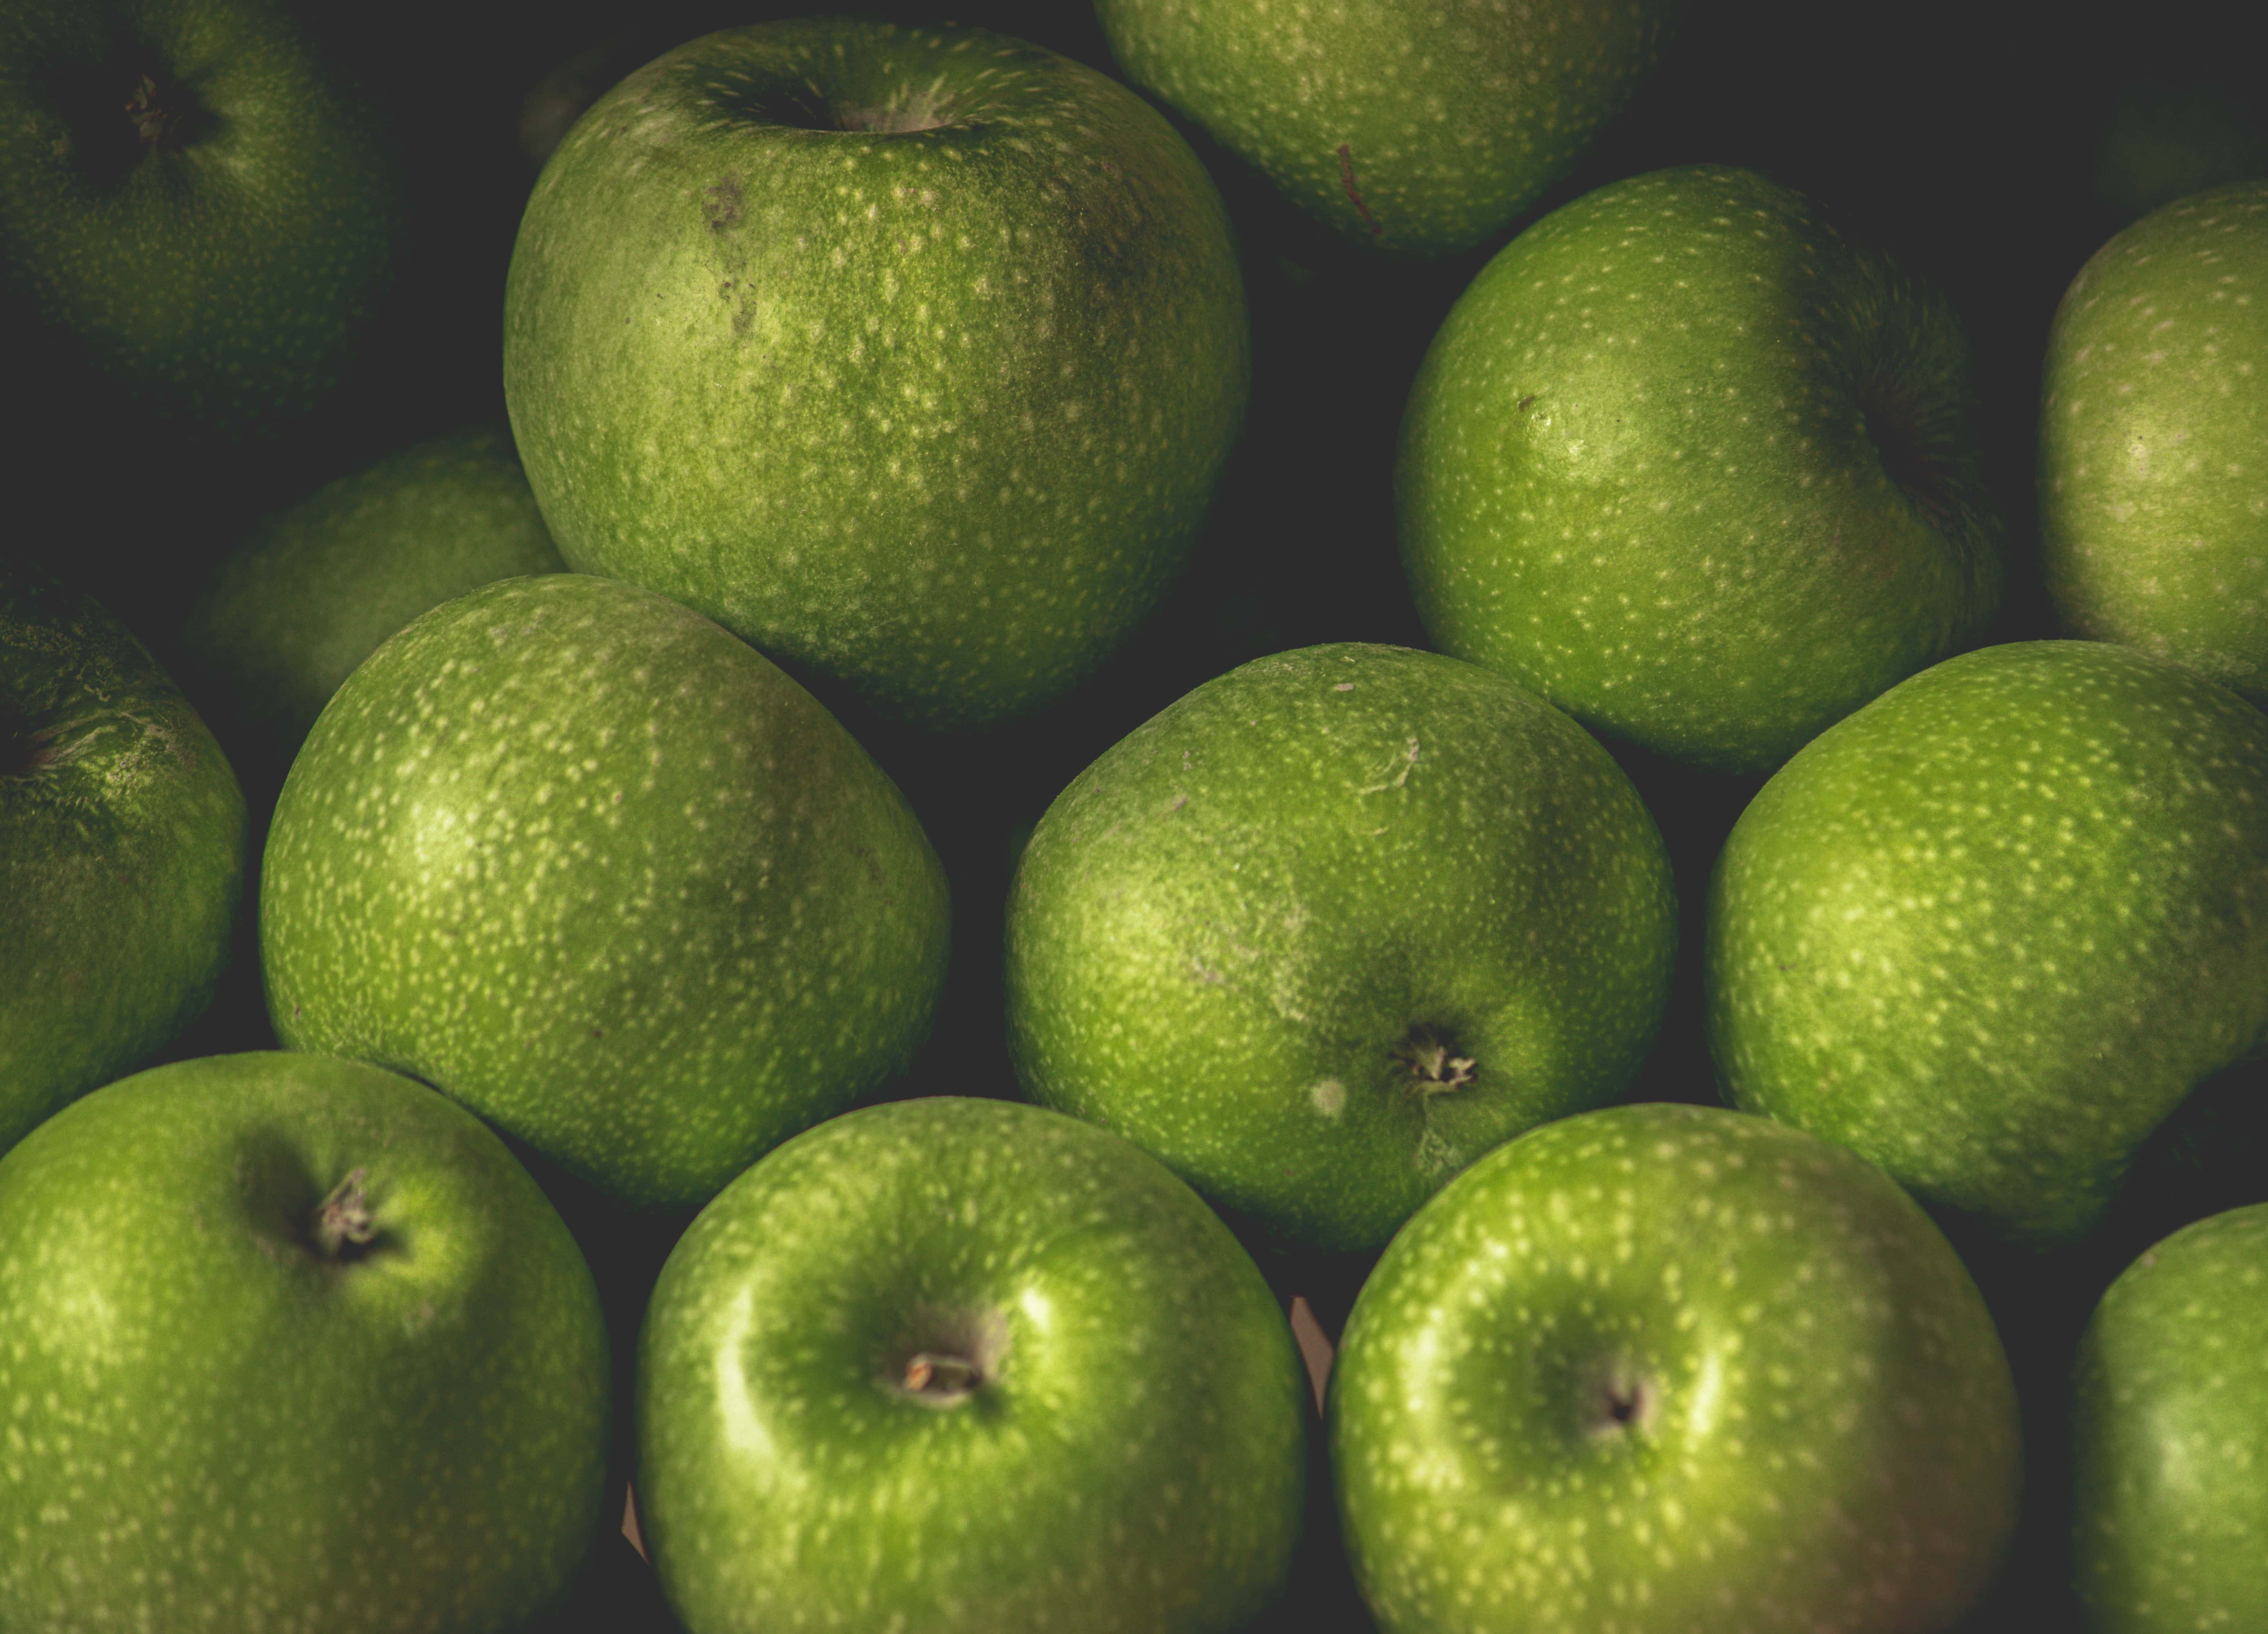 Free picture: apples, greenish yellow, apple, fresh, organic, close-up,  food, produce, health, vitamin